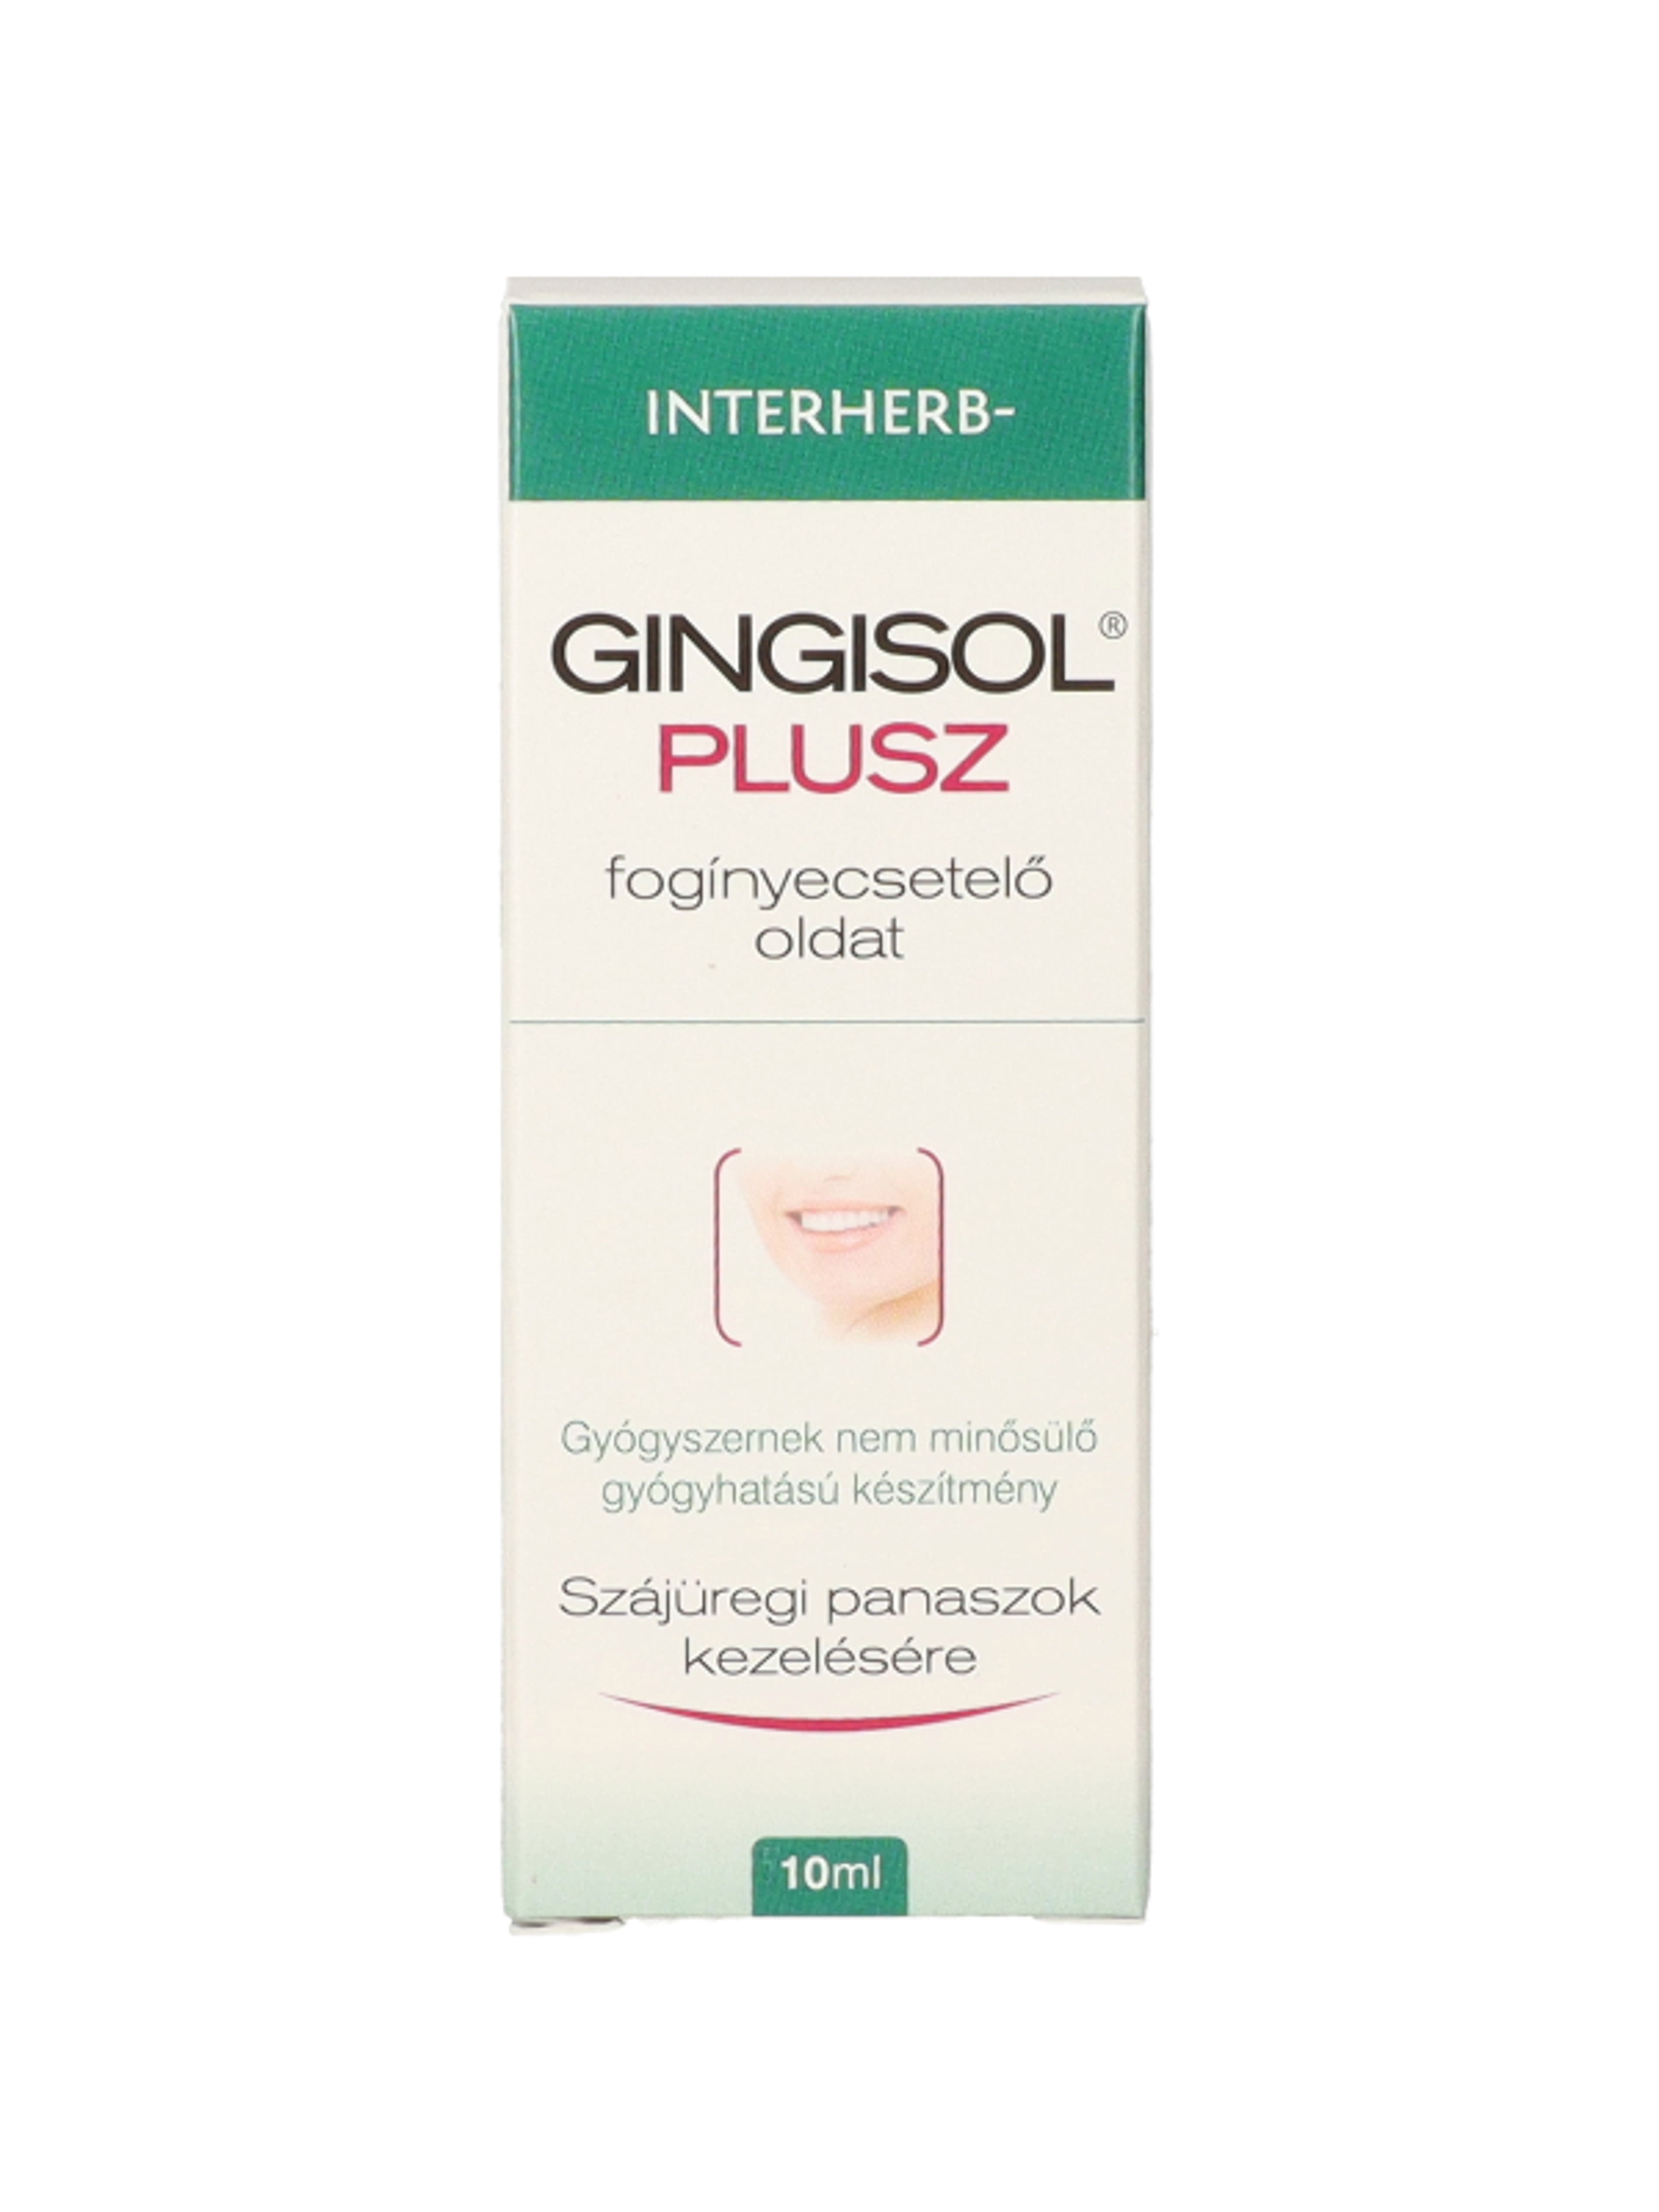 Interherb Gingisol Plus fogínyecsetelo oldat - 10 ml-1